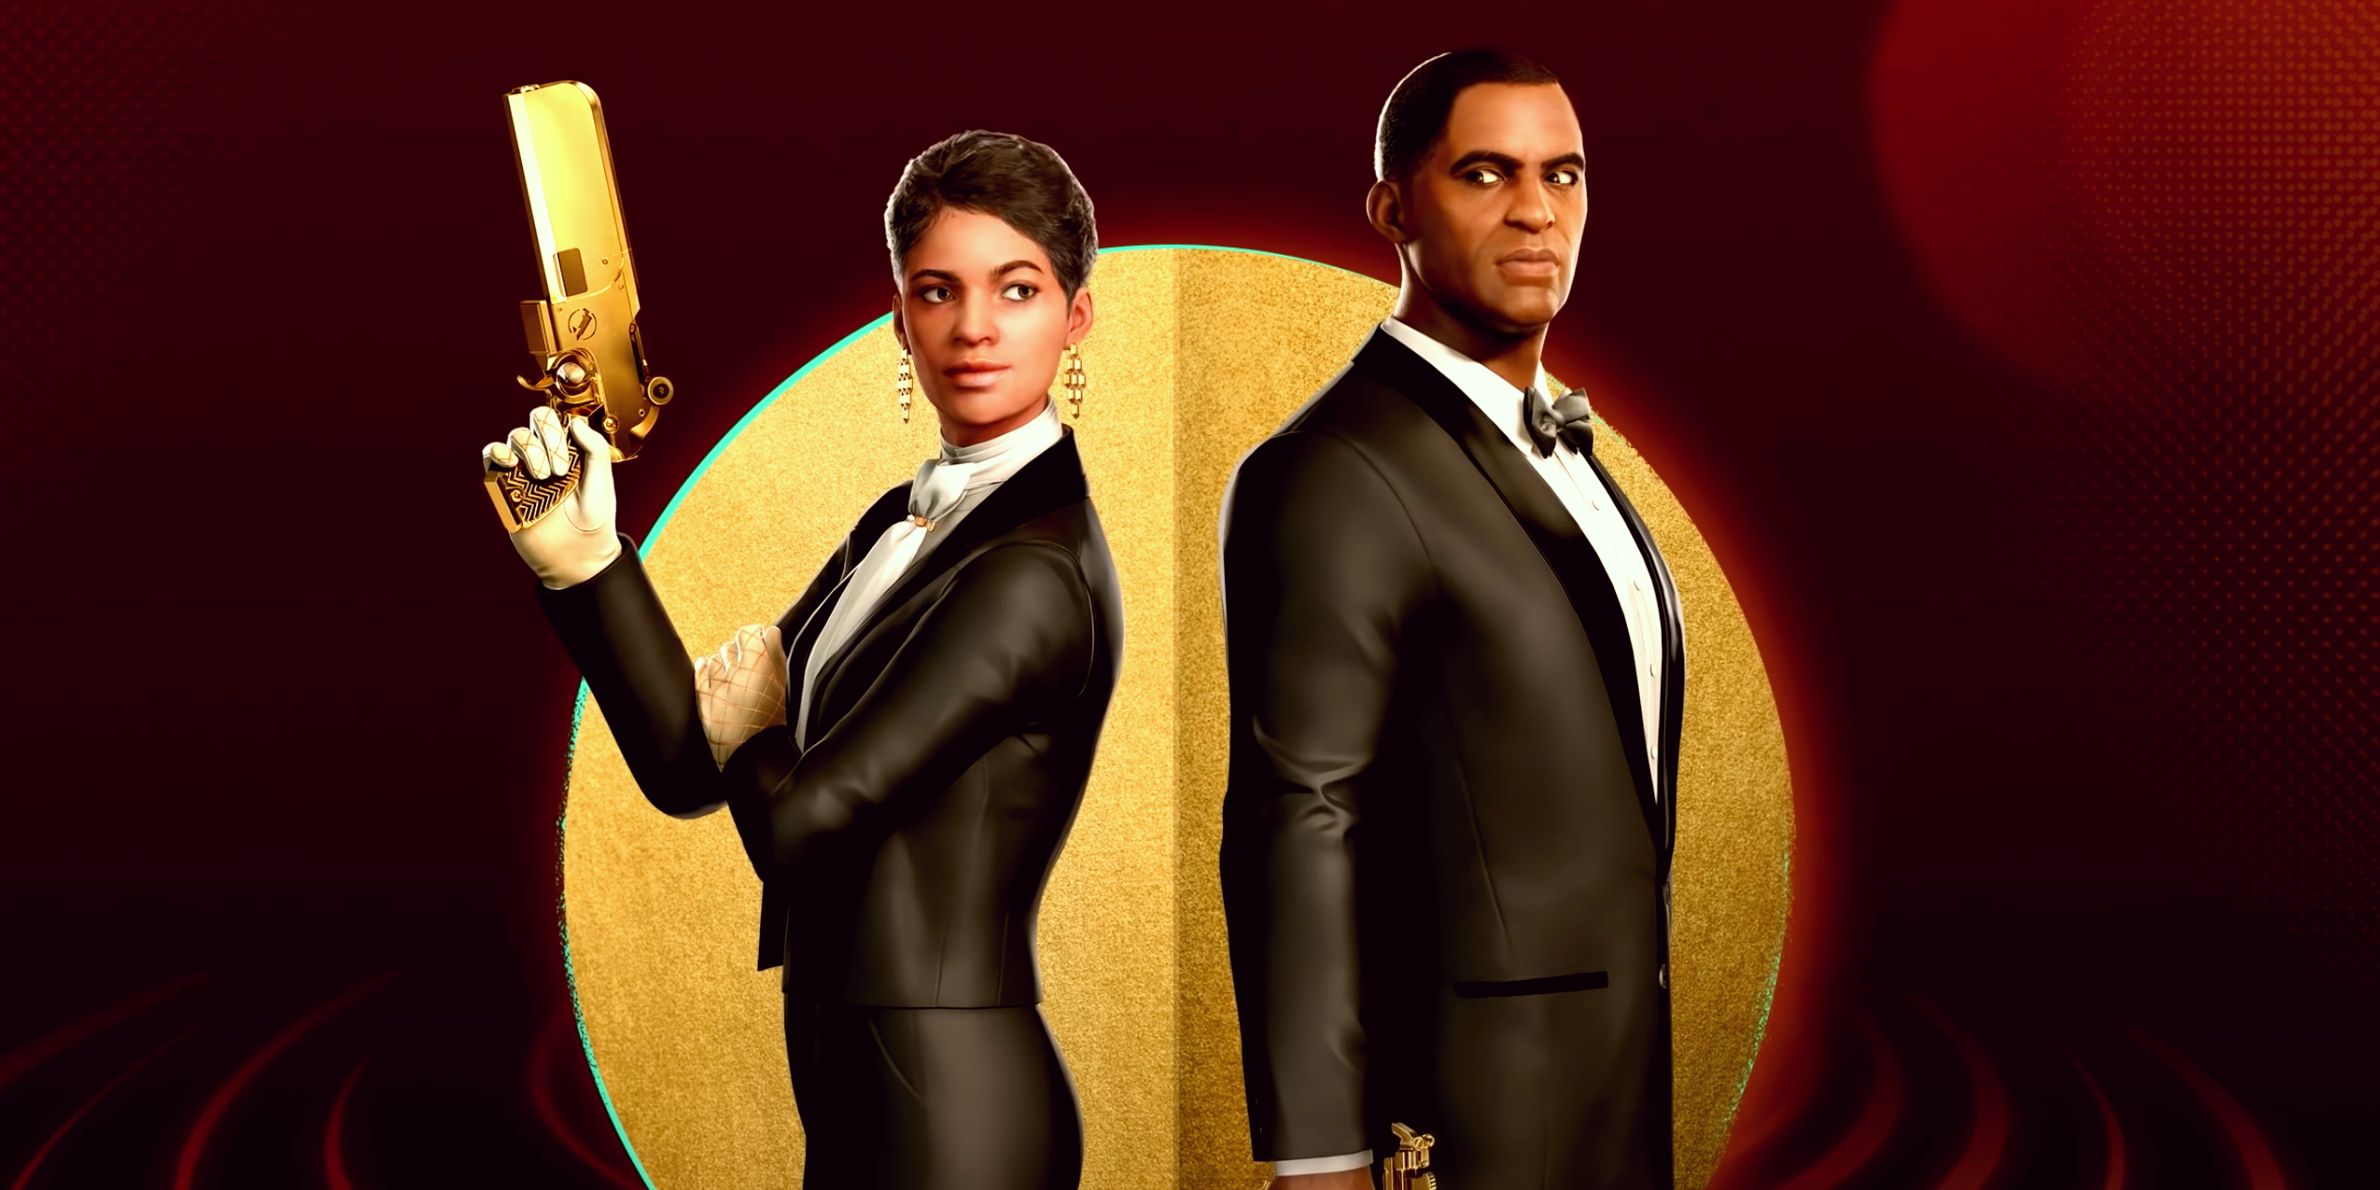 Deathloop's Colt and Julianna dressed in suits like James Bond